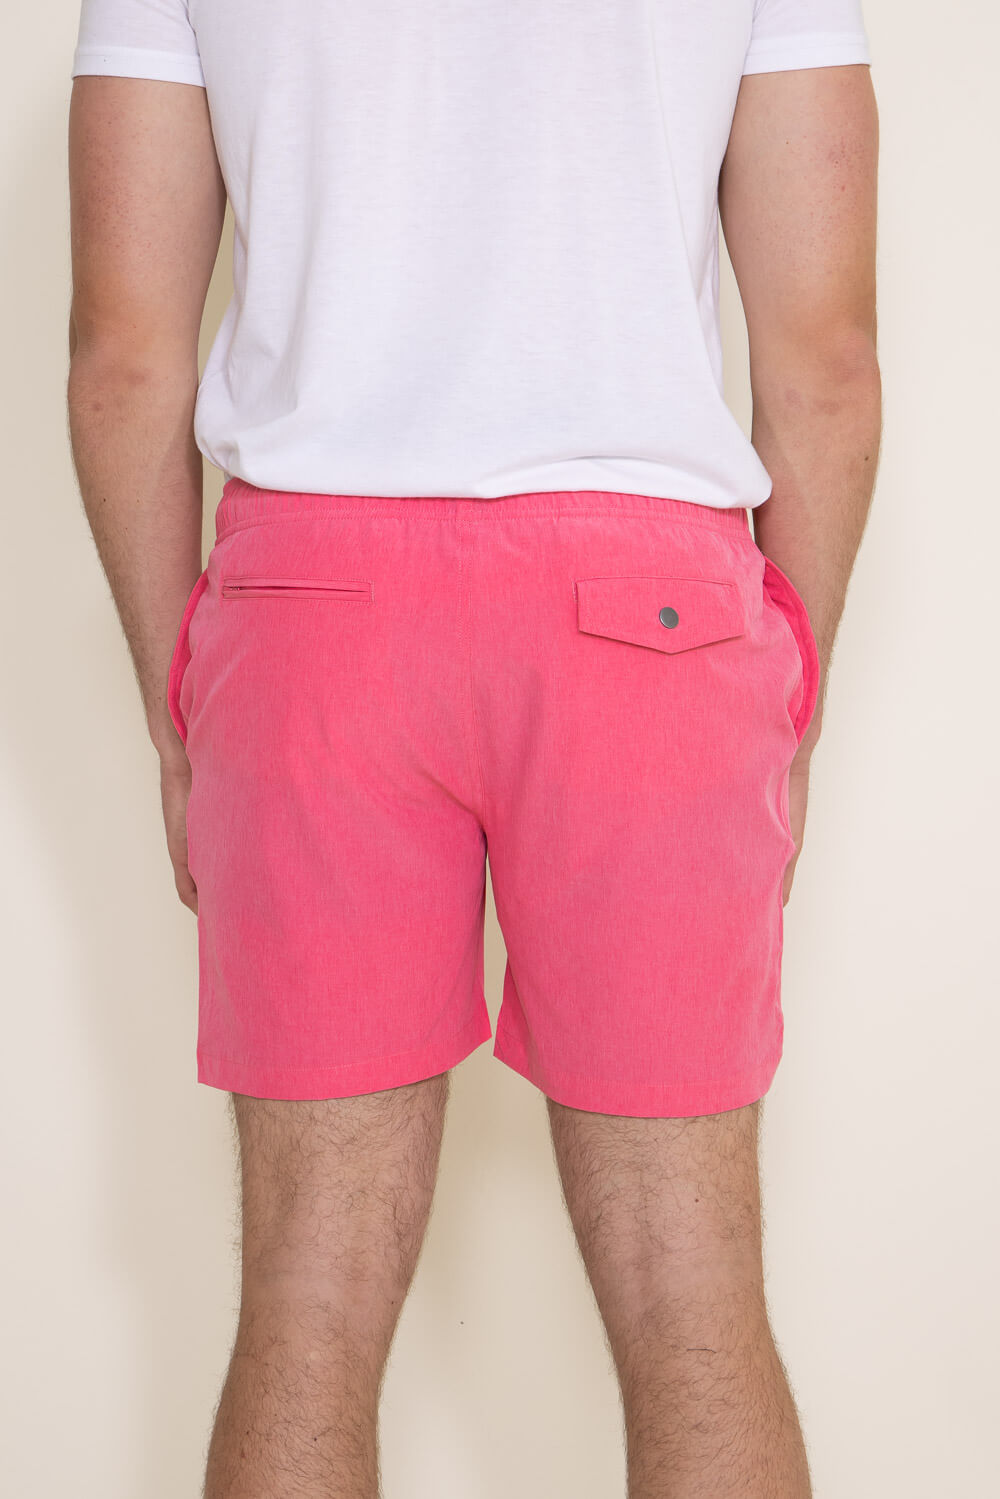 Hot pink men's short shorts